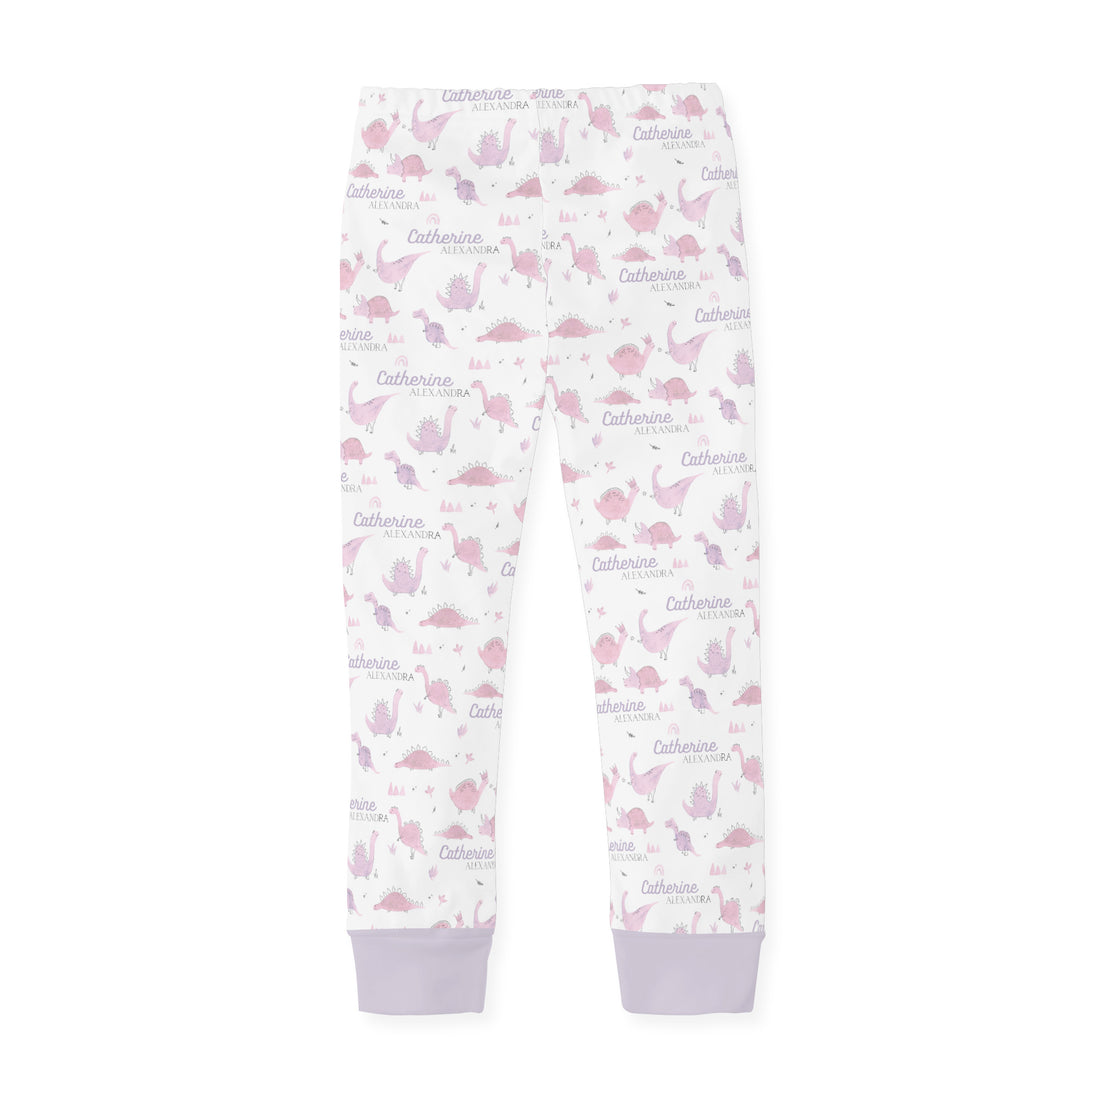 Pink Dinos Pajamas  - Short or Long Sleeve (3 months to kids 14)